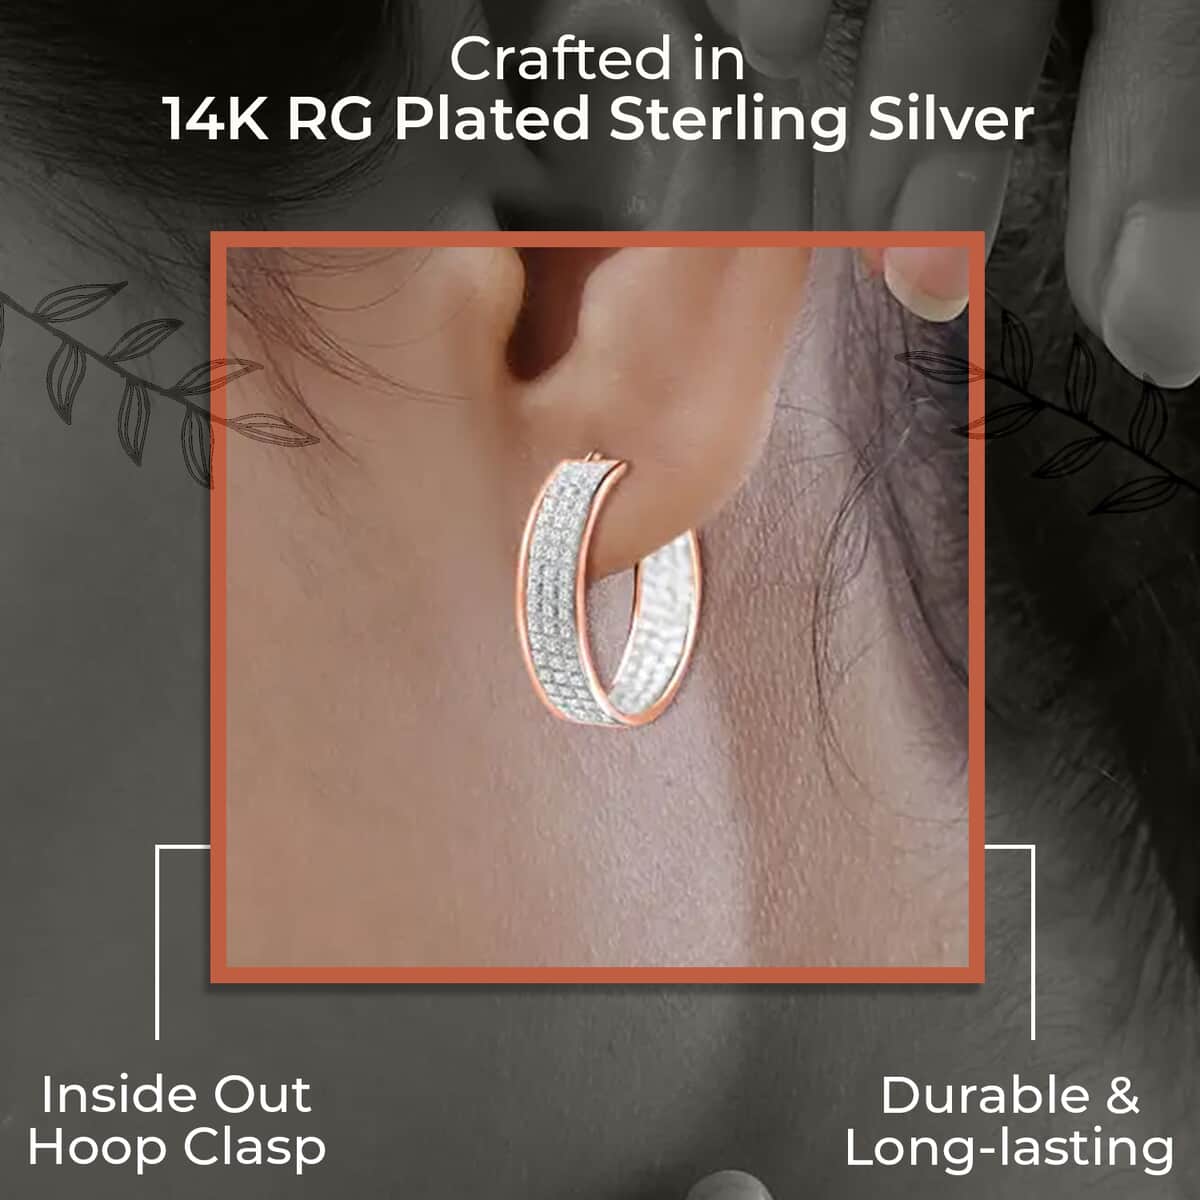 Sandblast Inside Out Hoop Earrings For Women, 14K Rose Gold Plated Sterling Silver Hoop Earrings, Gifts For Her 3.80 Grams image number 2